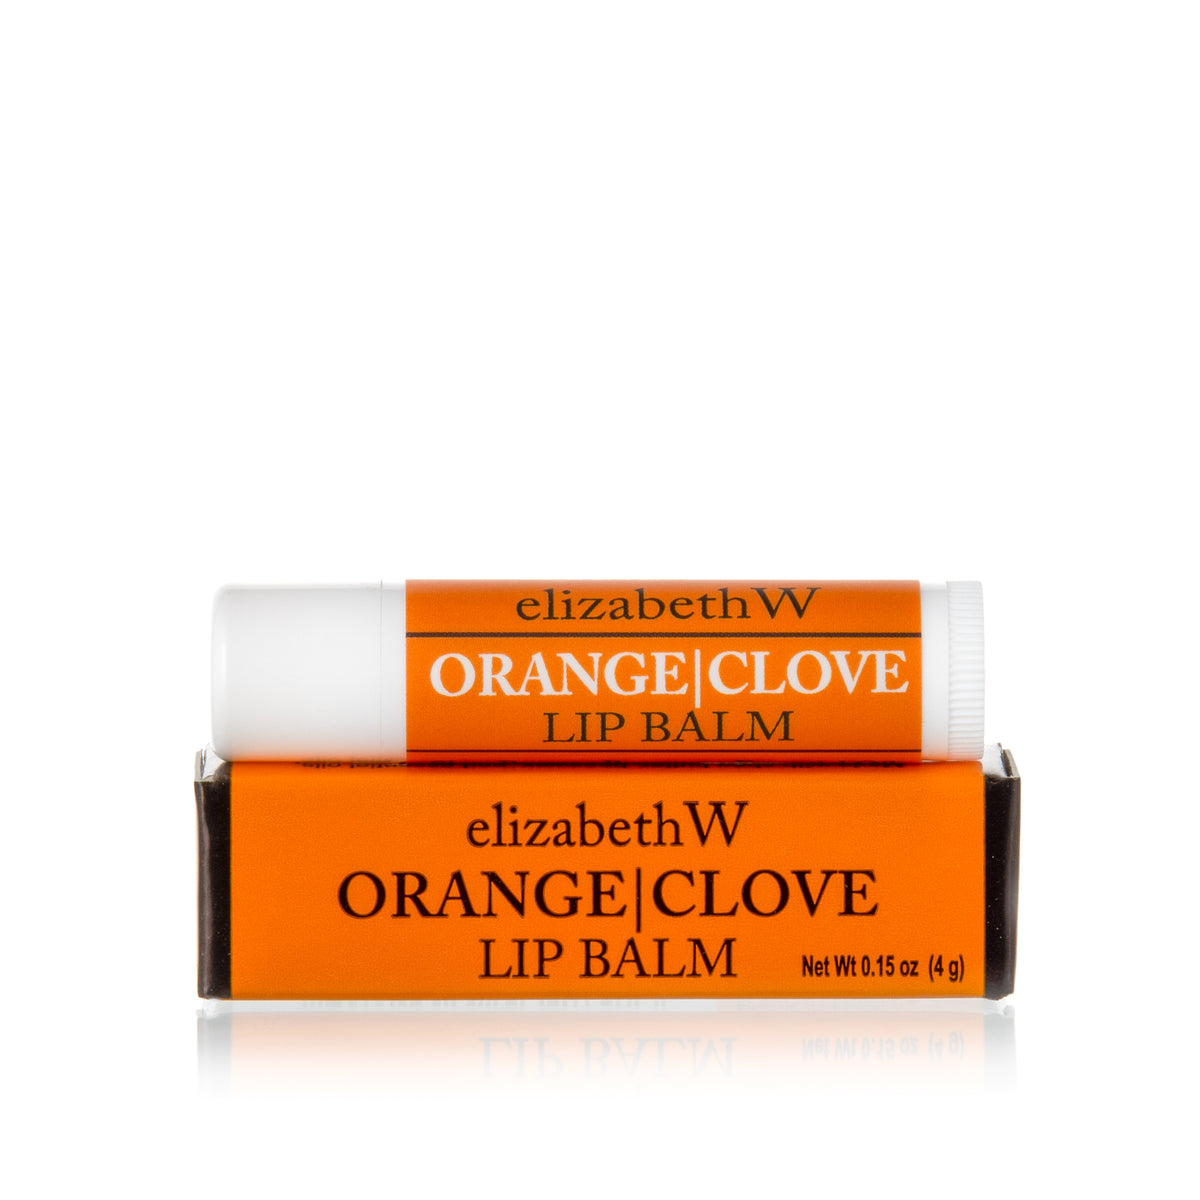 Orange Clove Lip Balm